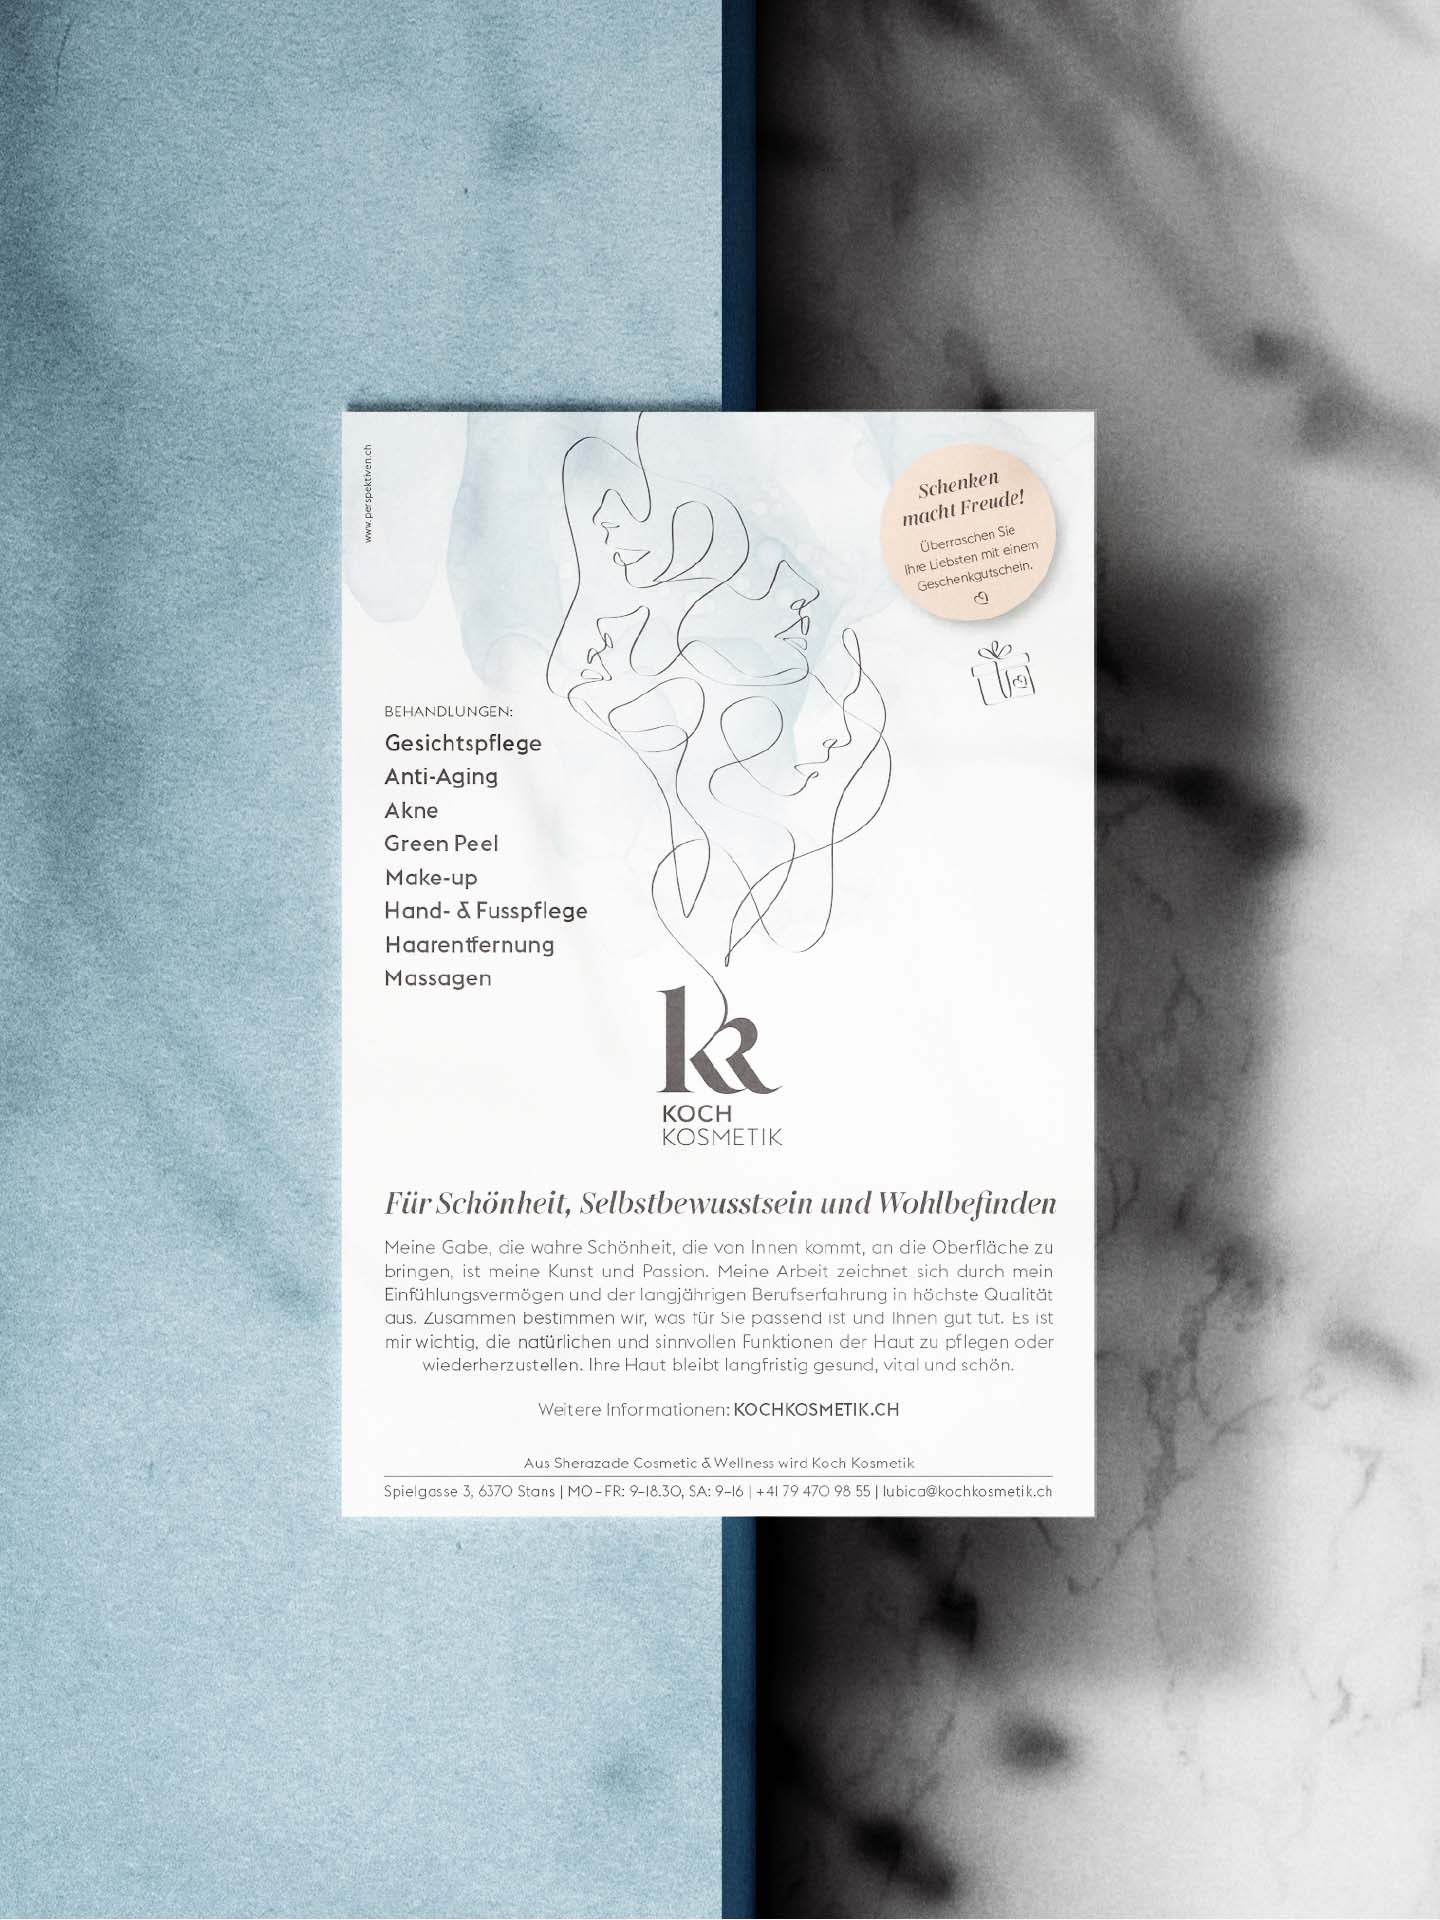 Flyer advert for Koch Kosmetik